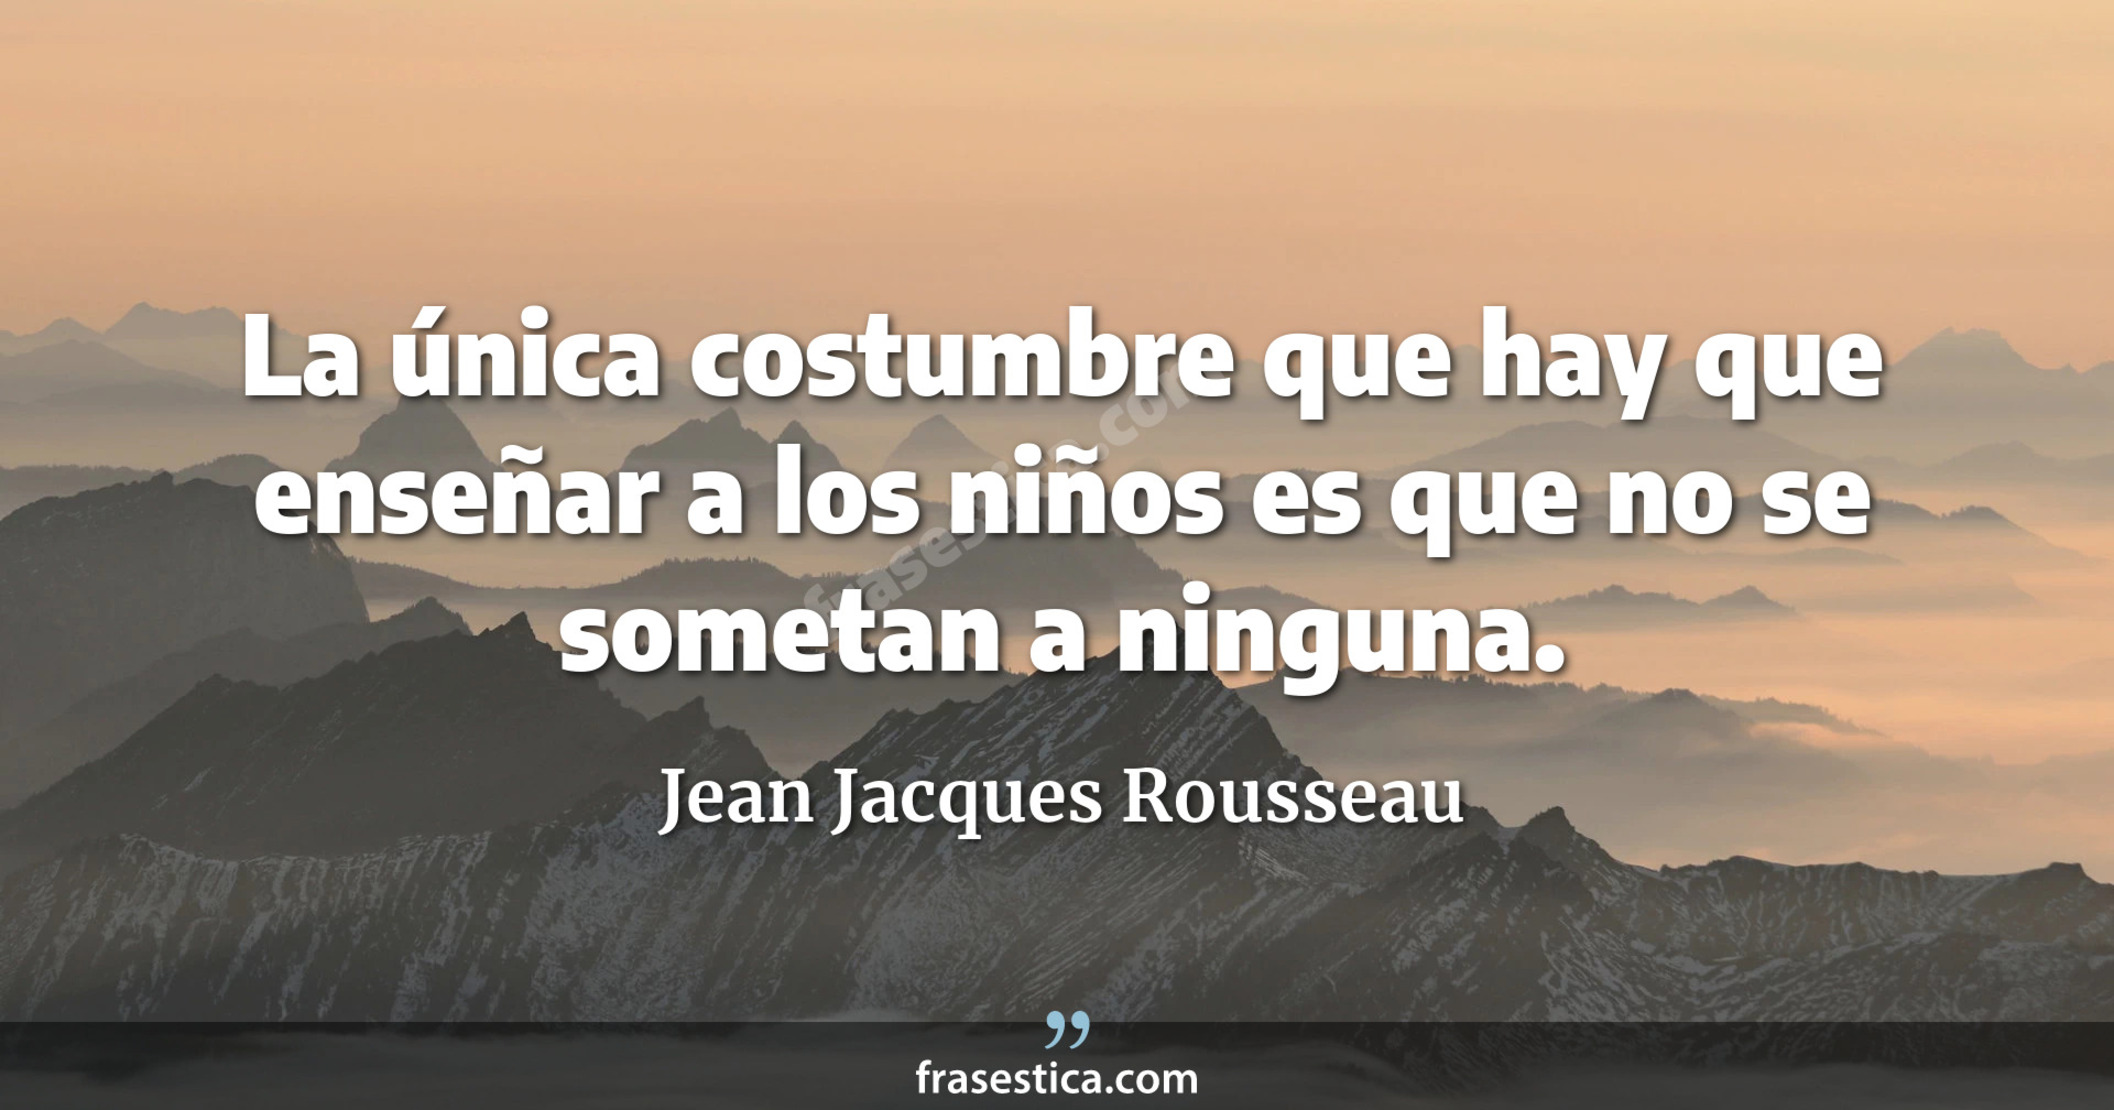 La única costumbre que hay que enseñar a los niños es que no se sometan a ninguna. - Jean Jacques Rousseau